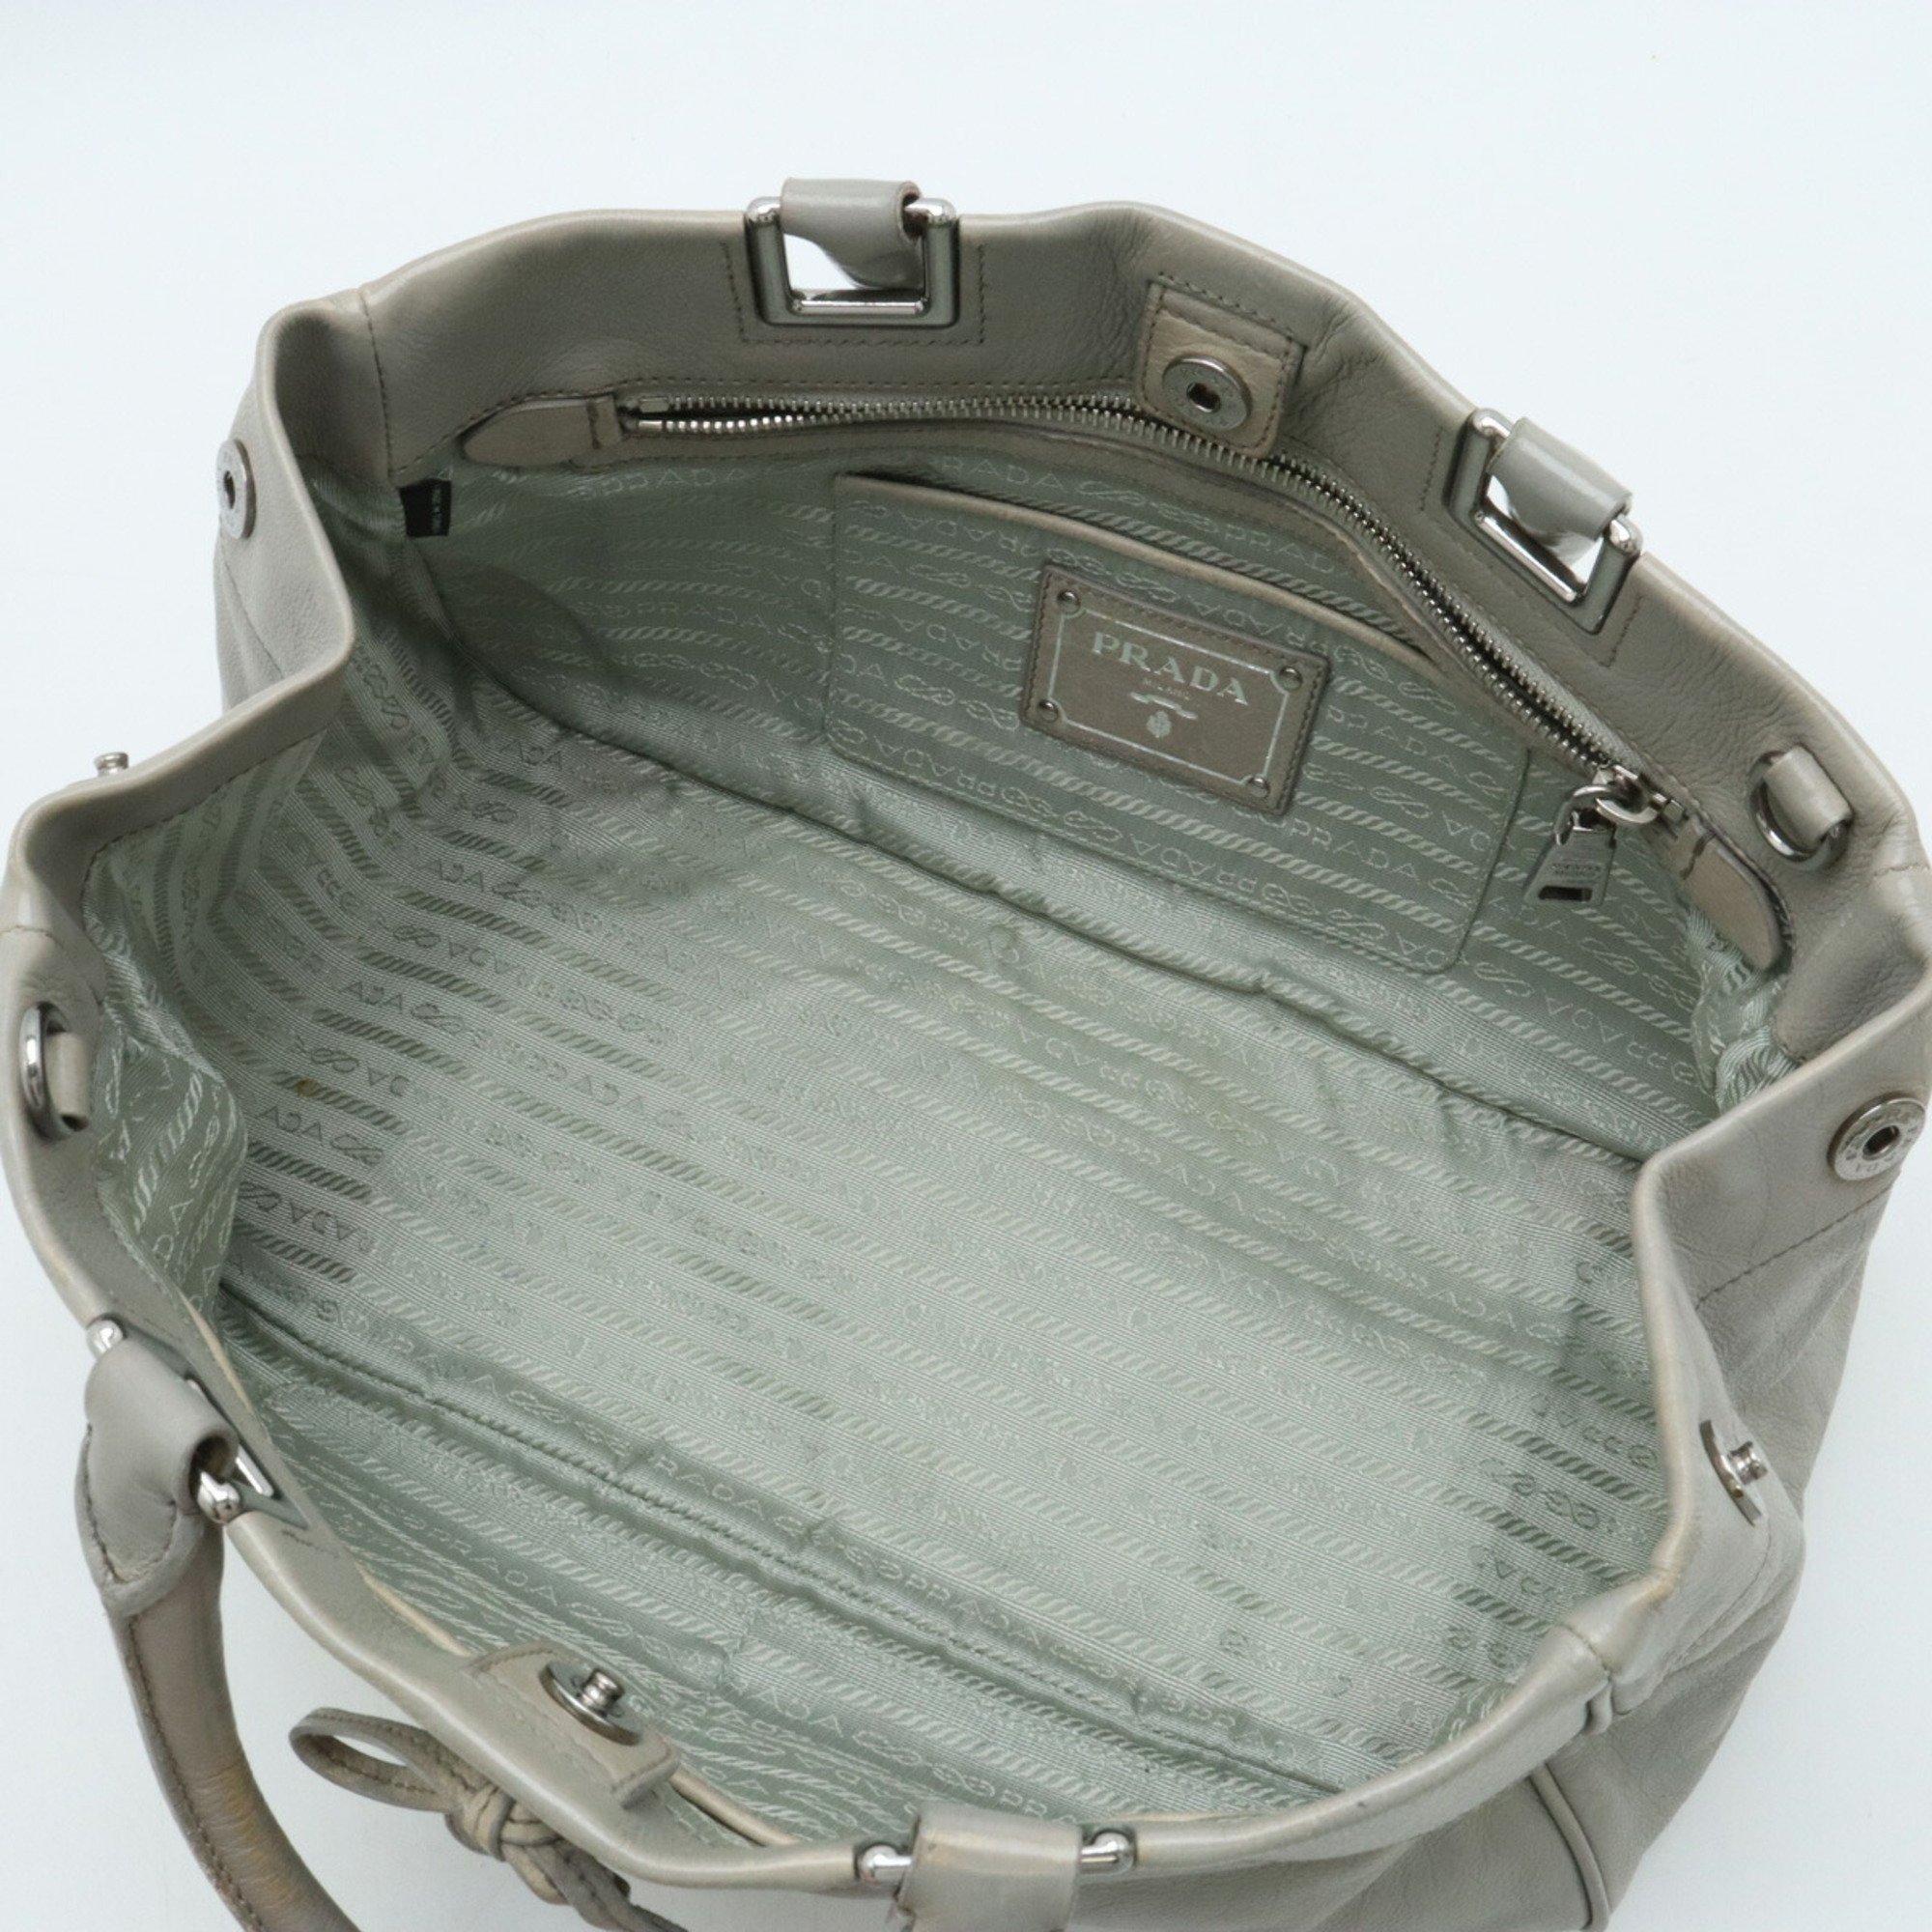 PRADA Prada Bow Handbag Tote Bag Leather Grey BN2234